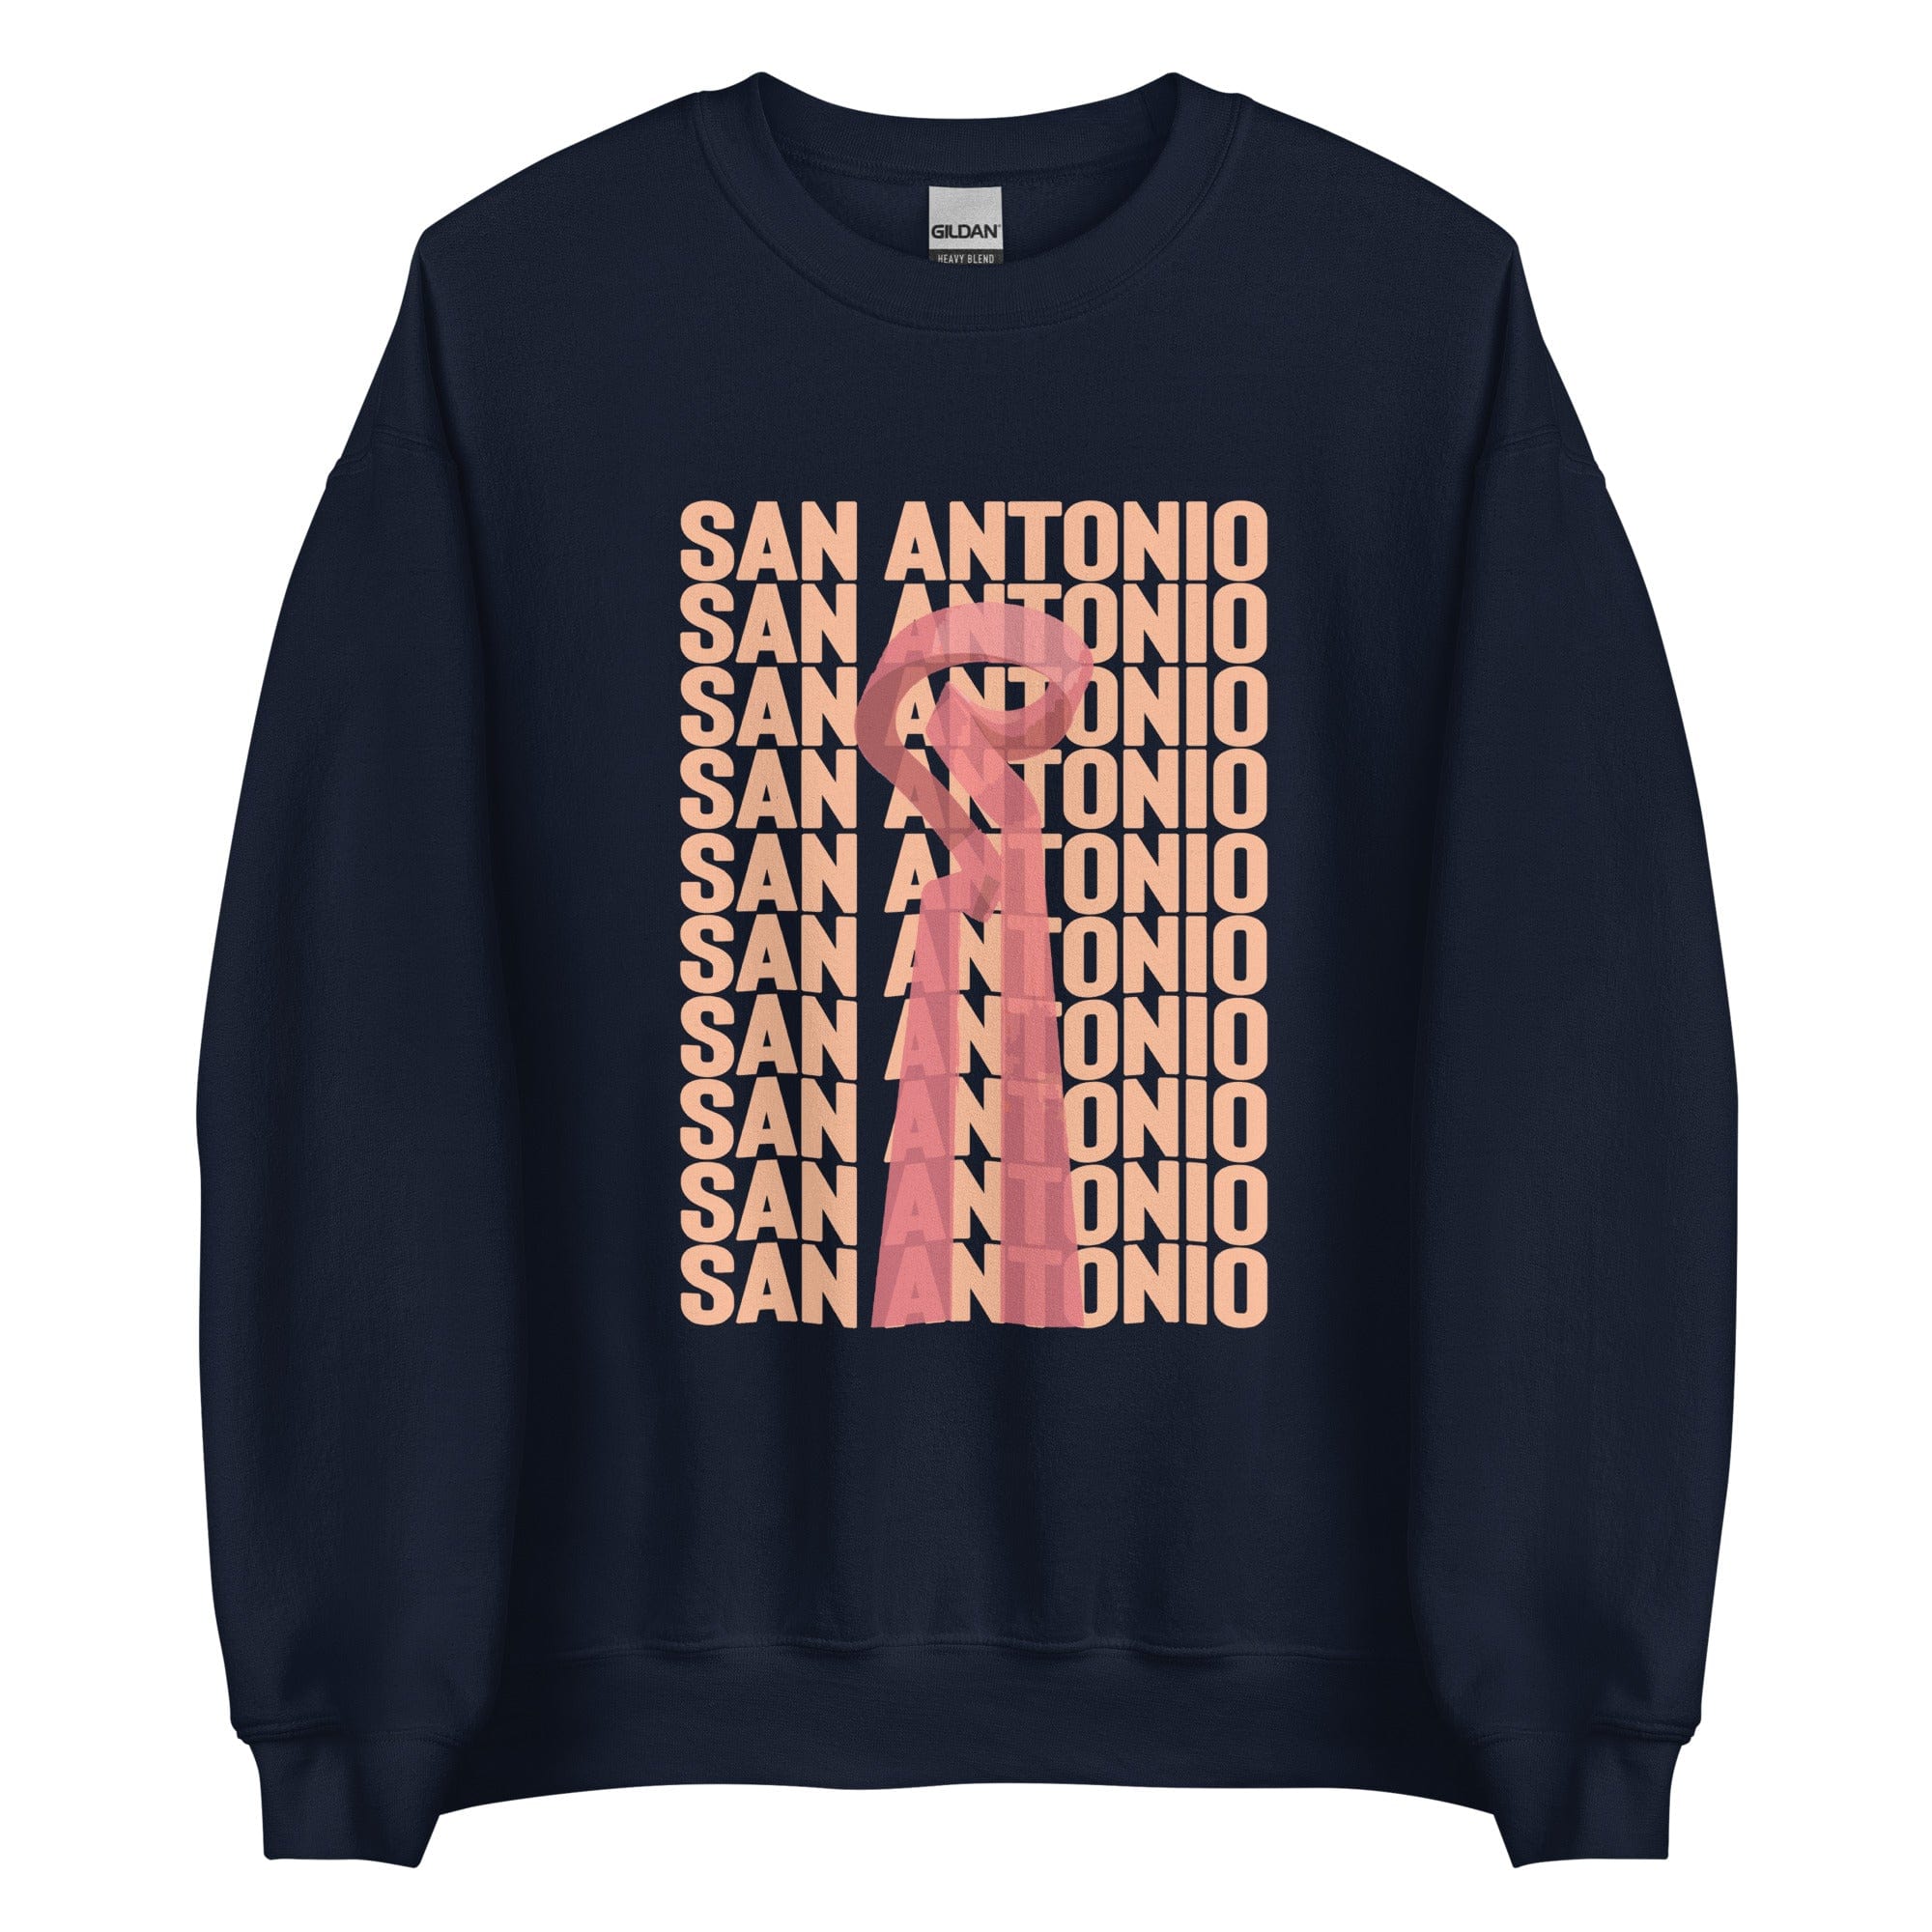 City Shirt Co San Antonio Repeat Sweatshirt Navy / S